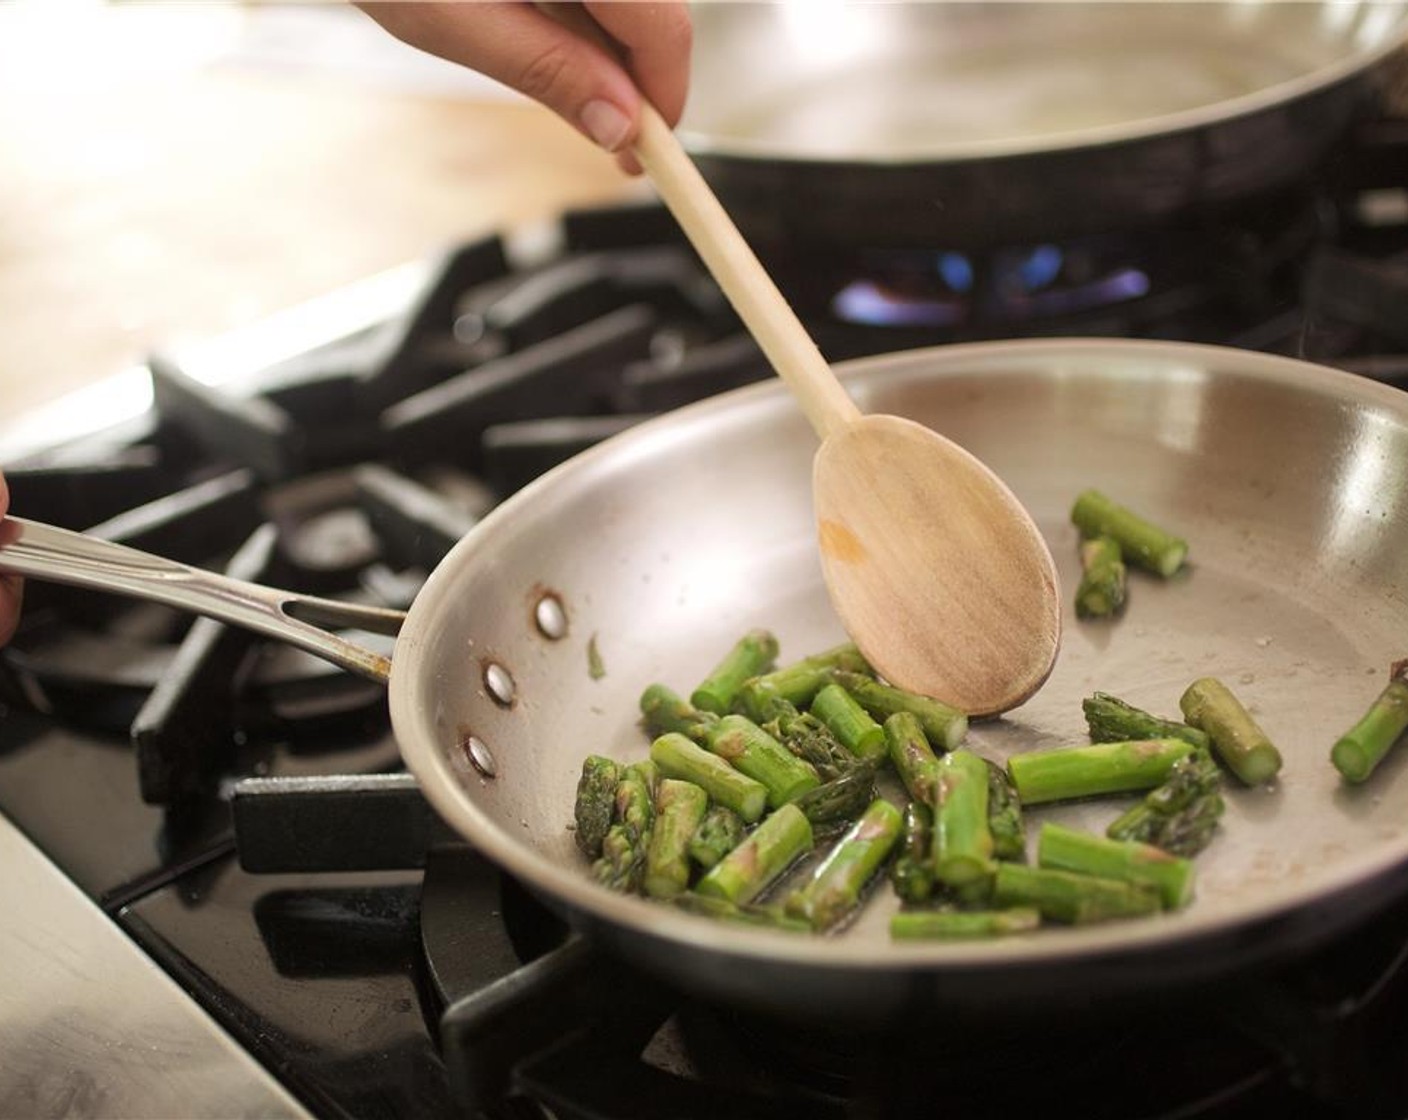 step 7 Heat a medium saute pan over medium high heat. Add Canola Oil (1 Tbsp). When hot, add asparagus and Salt (1/2 tsp) and saute for 1 minute.